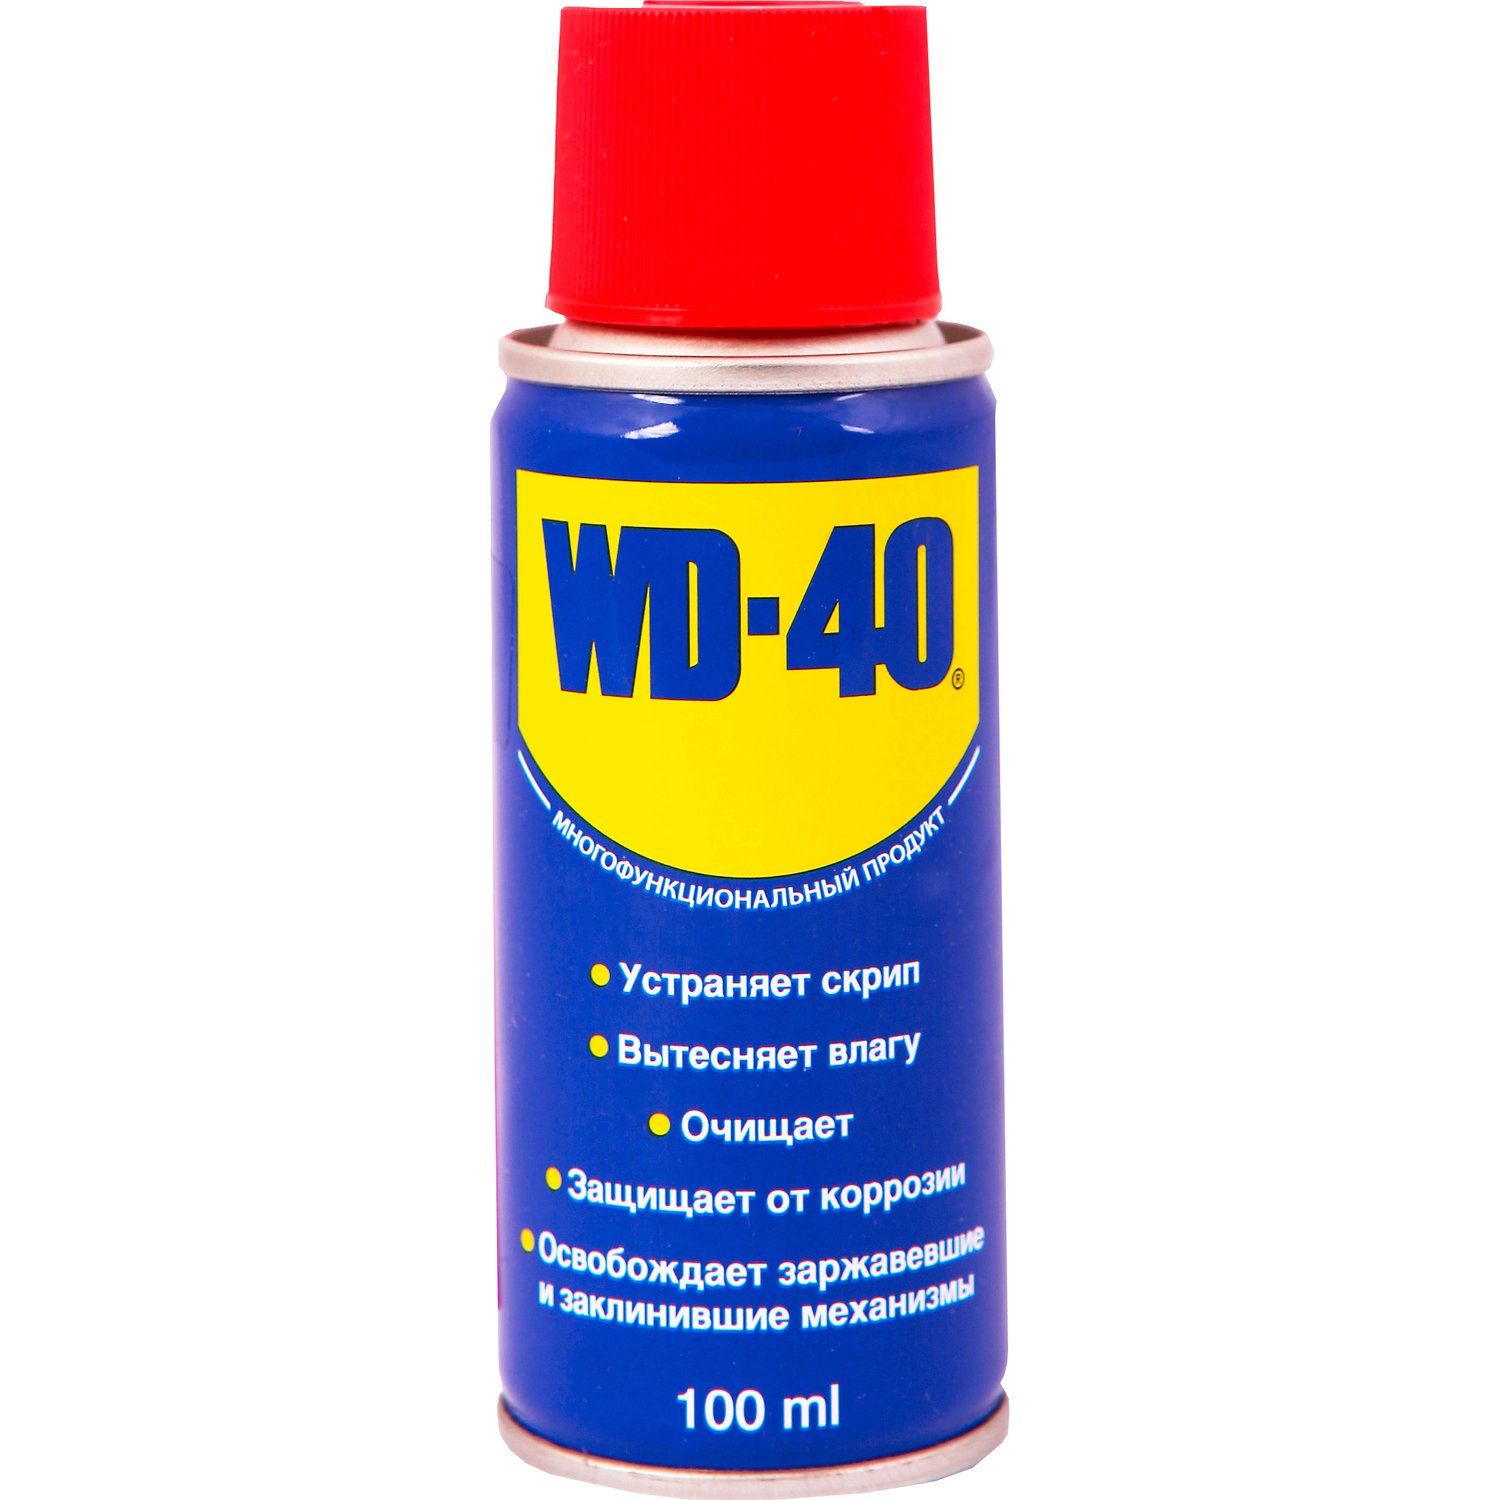 WD - 40 5l WD-40